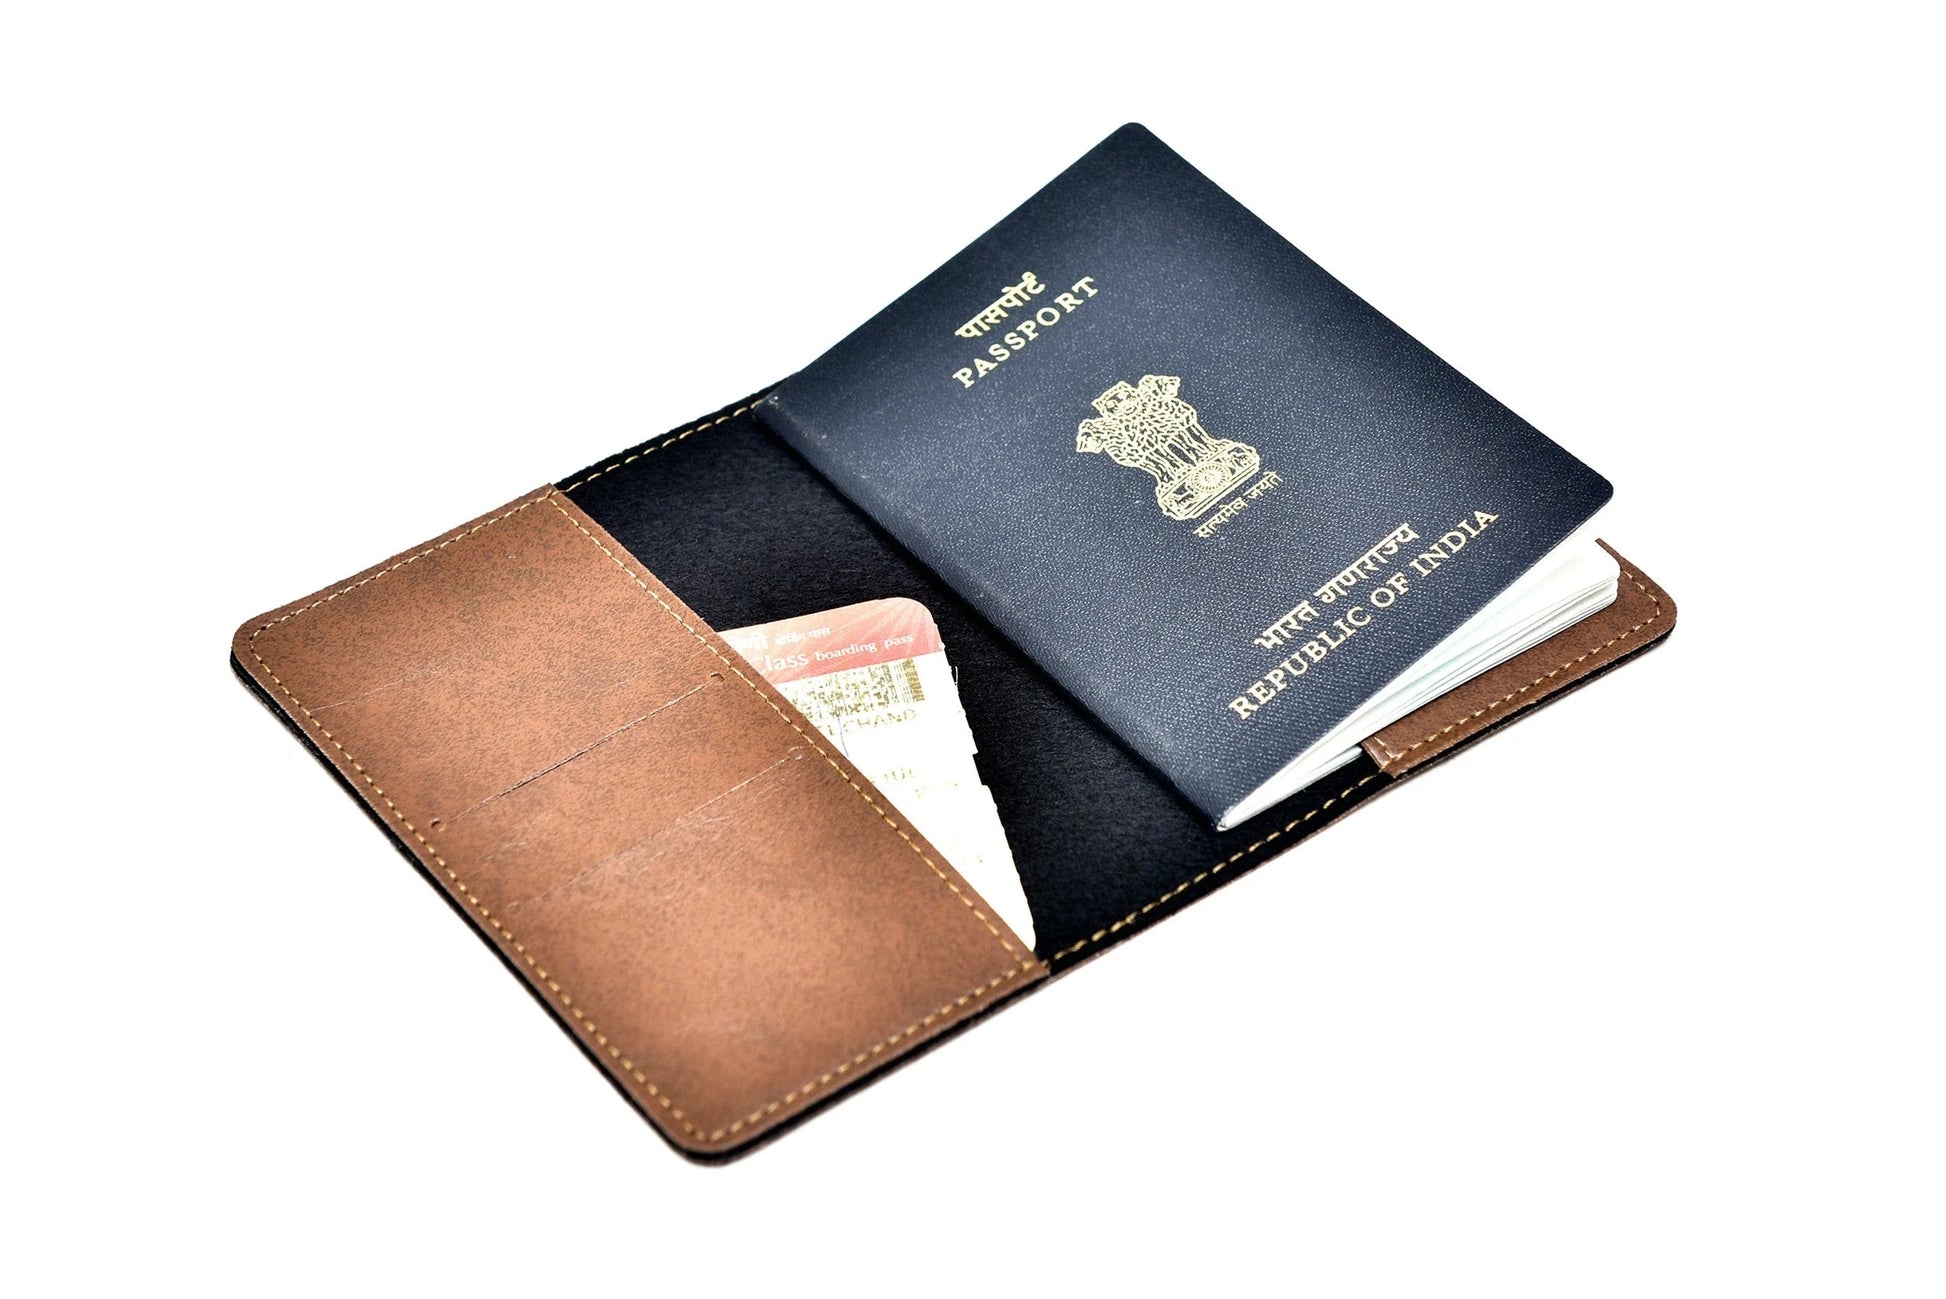 Inside or open view of tan passport